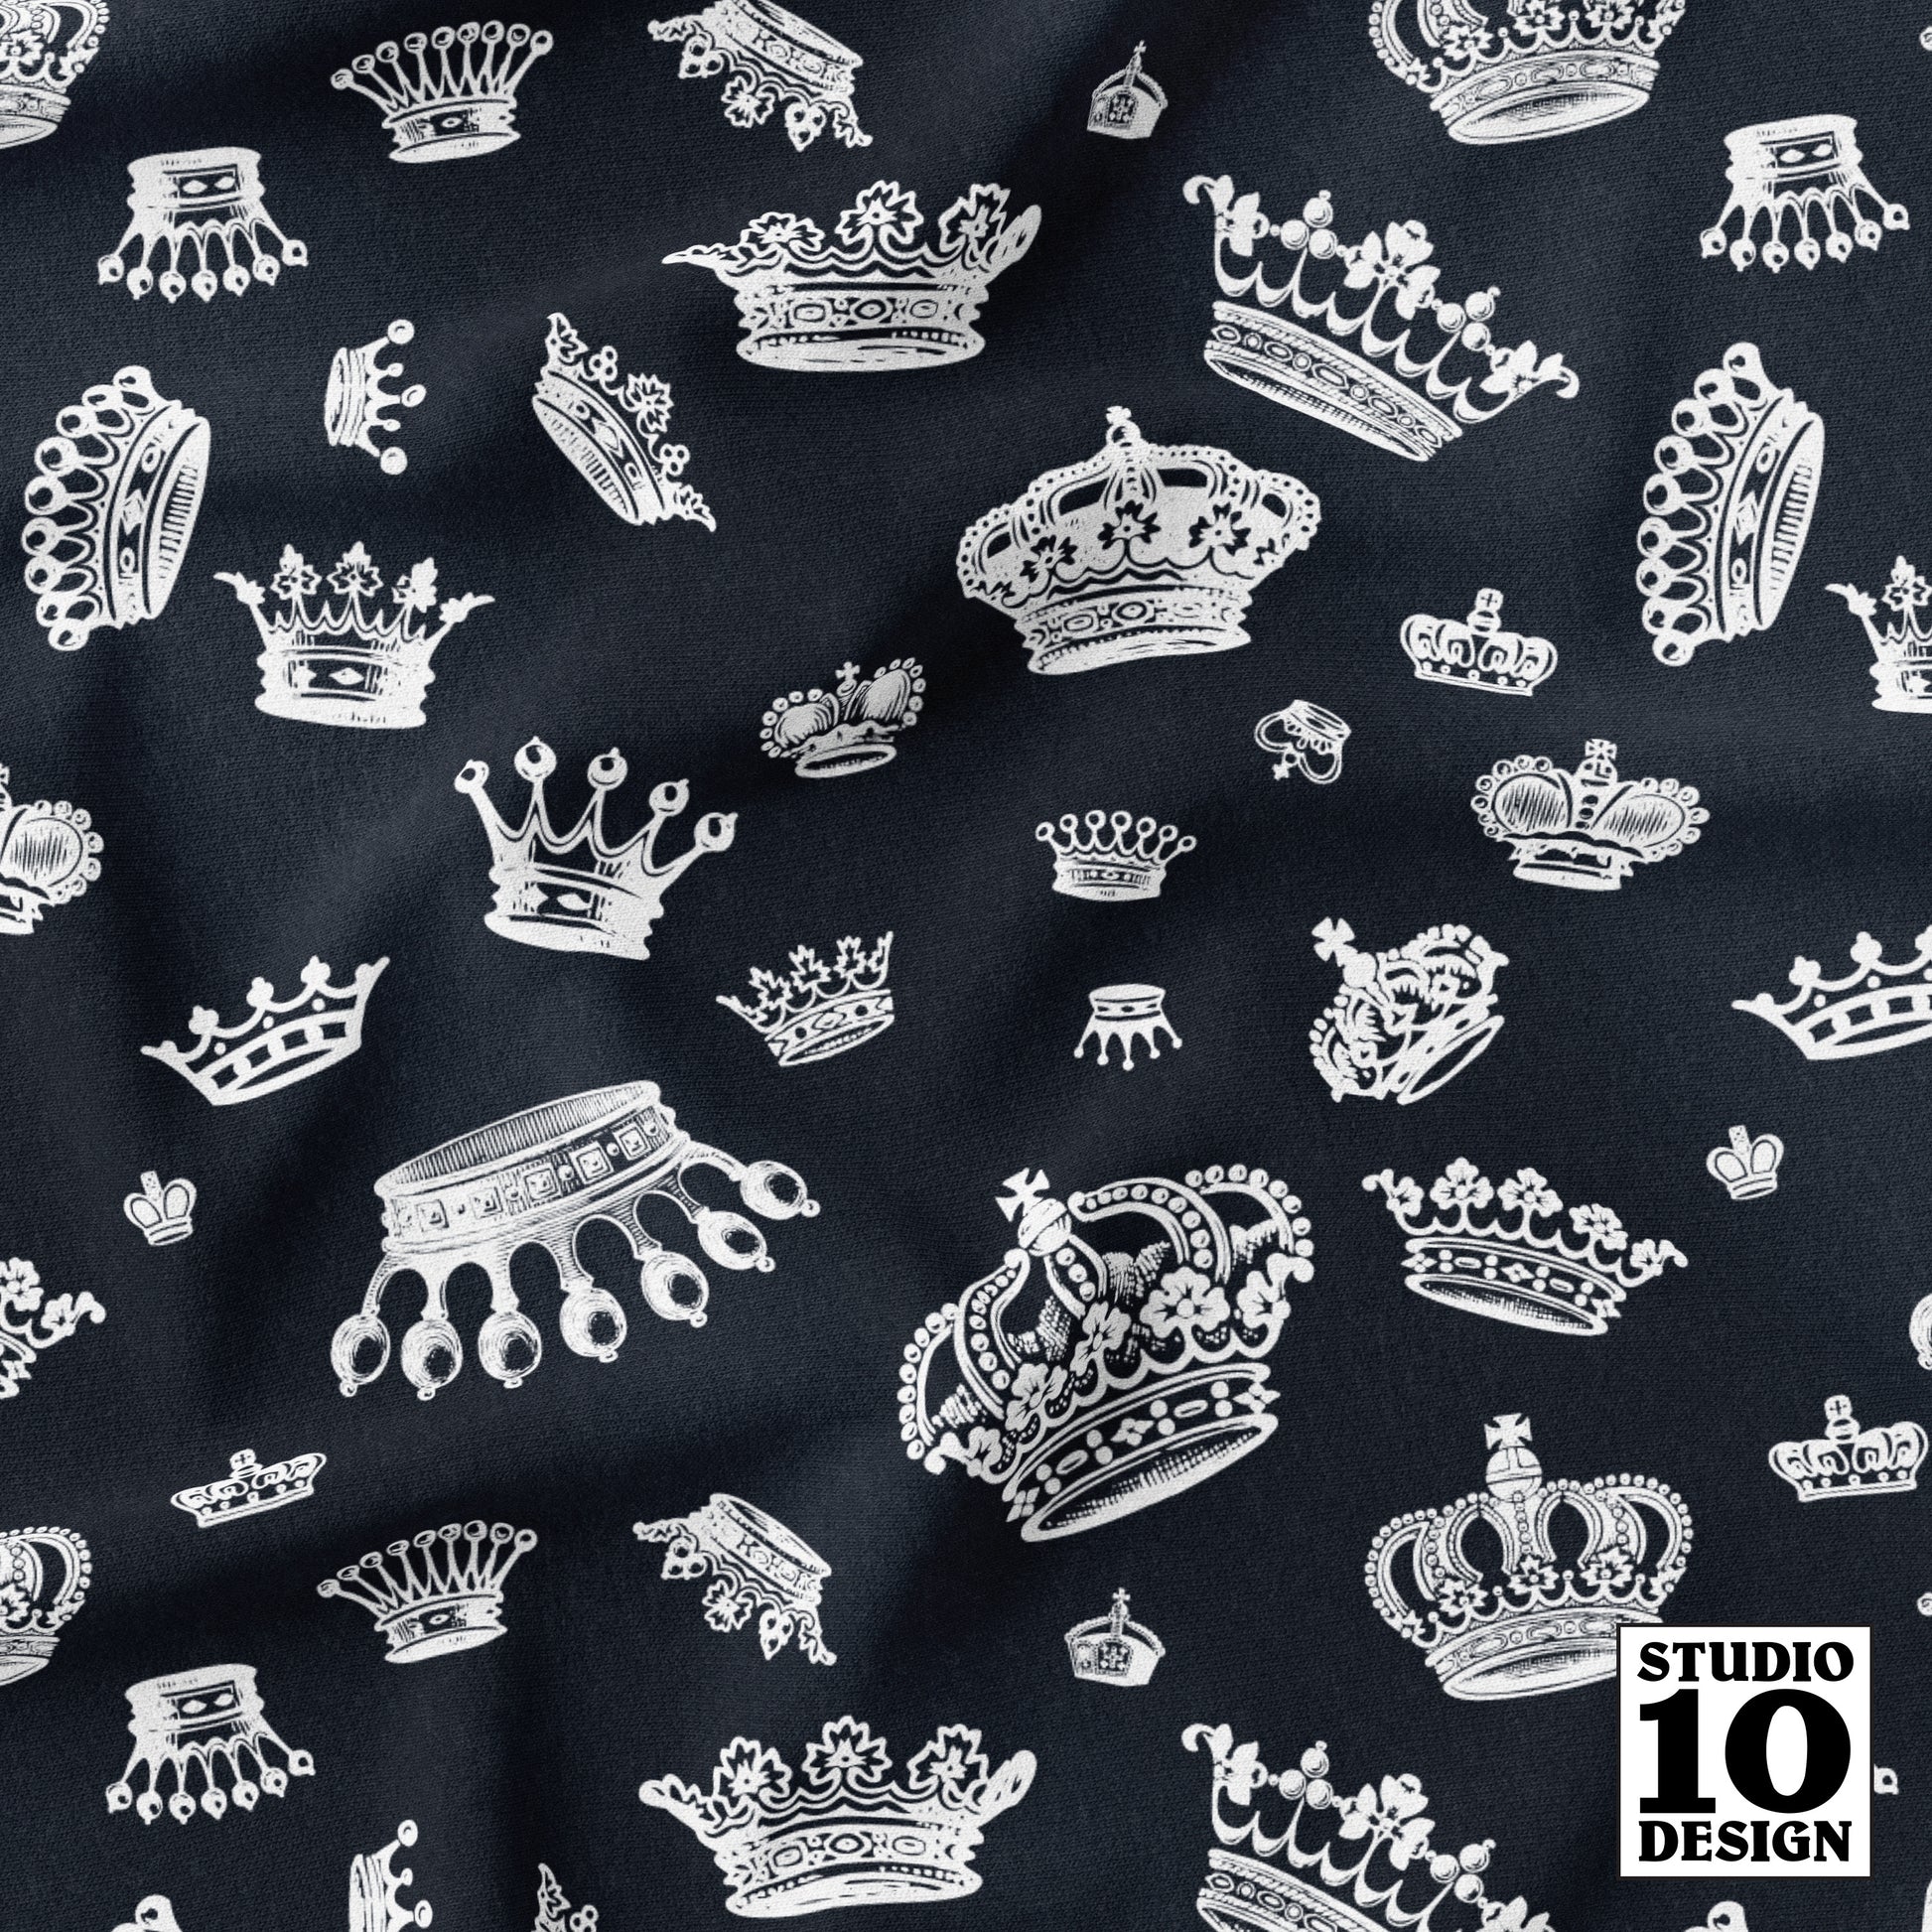 Royal Crowns White+Black Printed Fabric by Studio Ten Design